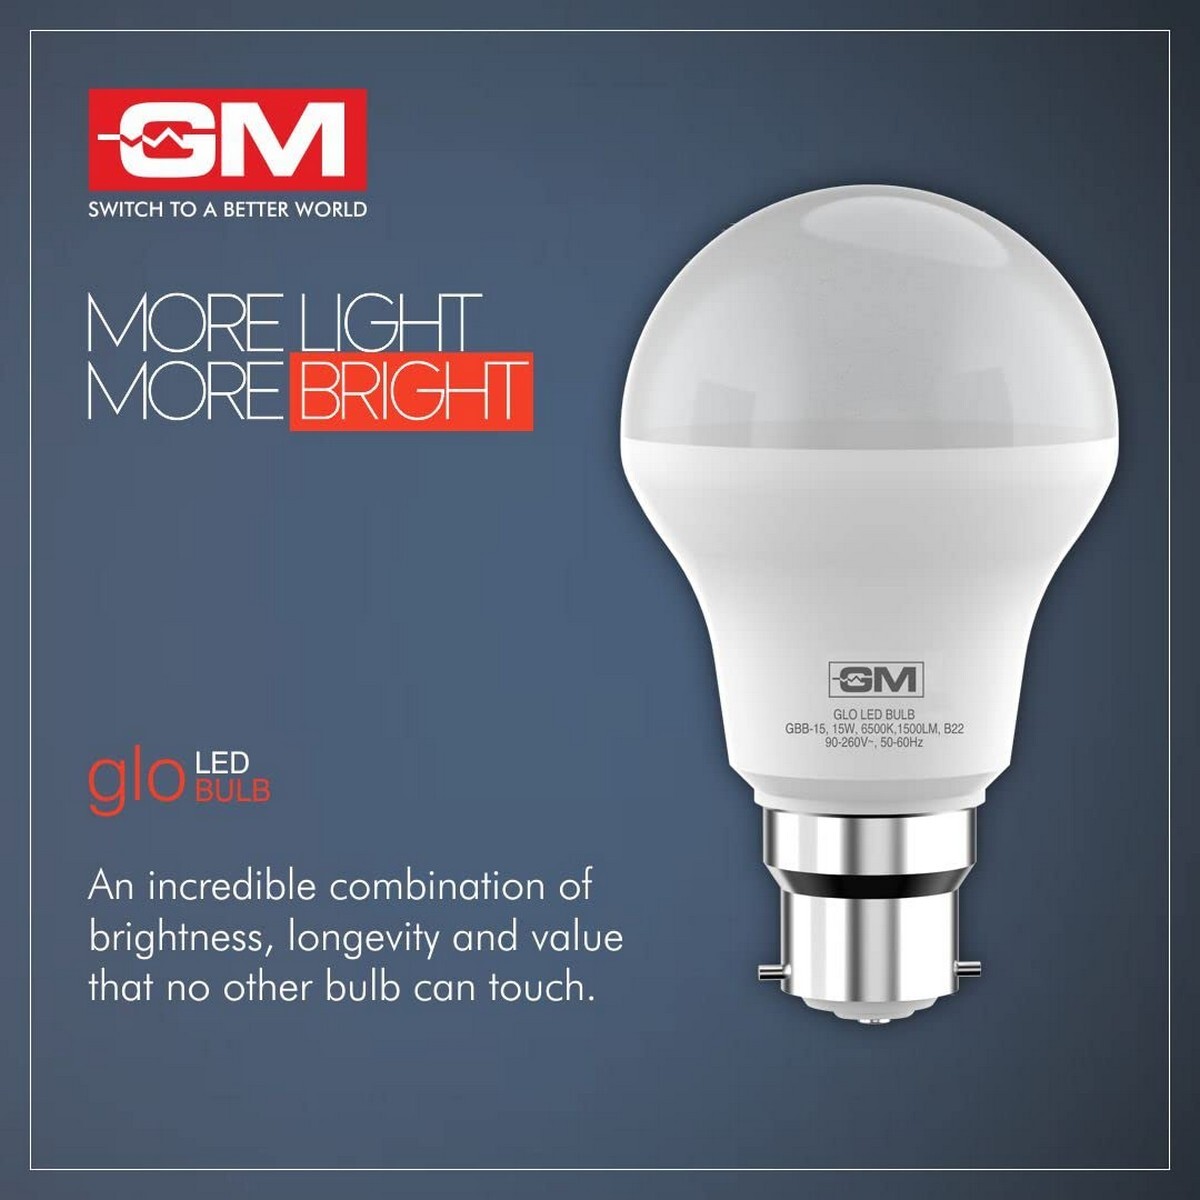 GM Glo 15Watt LED Bulb-B22